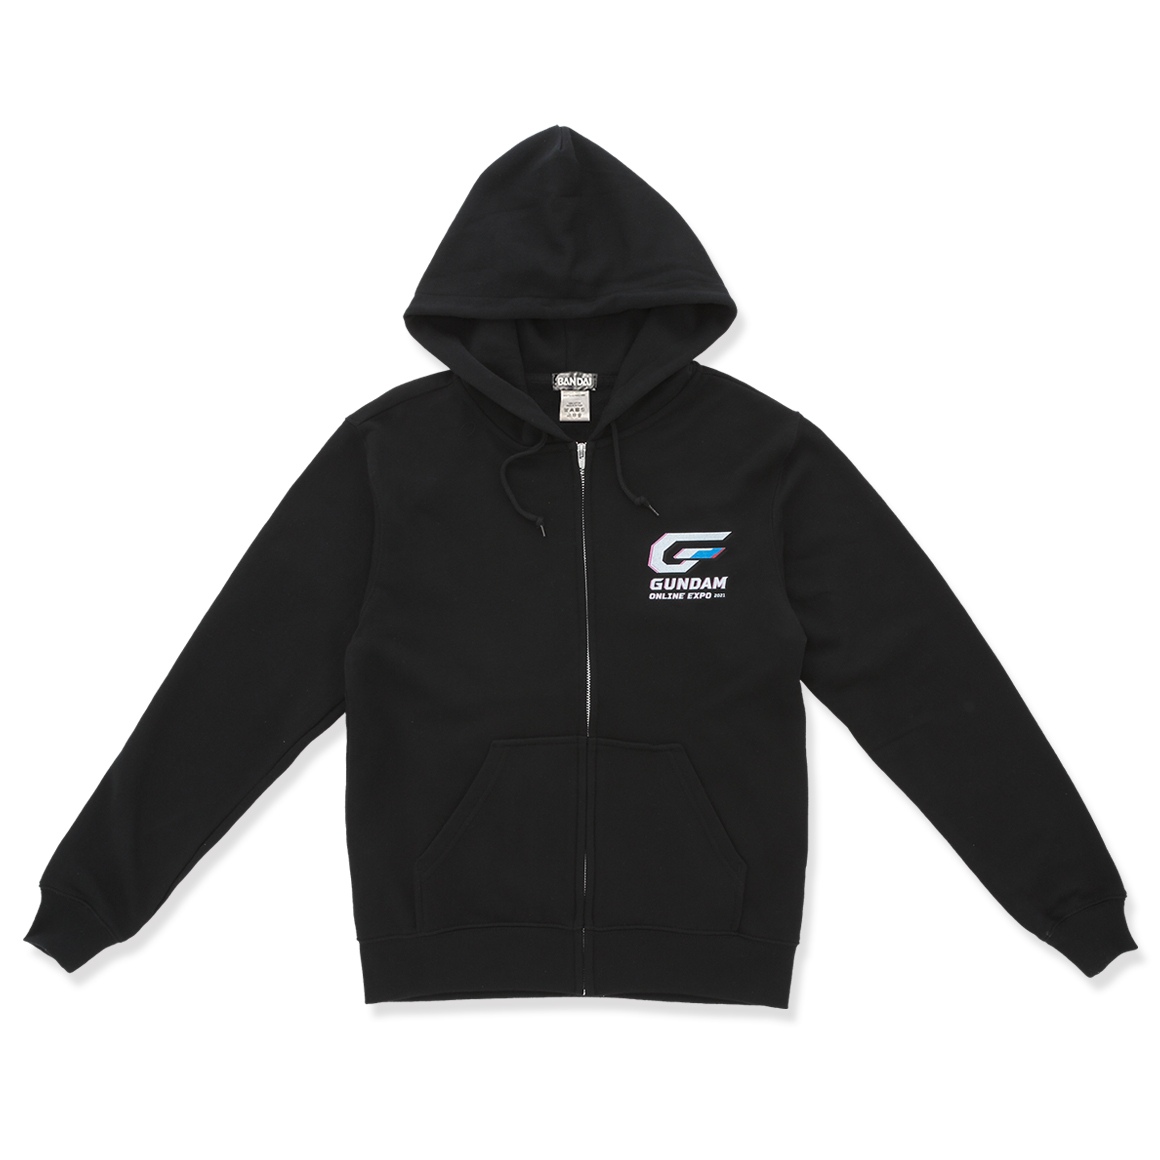 Gundam Online Expo Key Visual Sweater 2021 (Black)